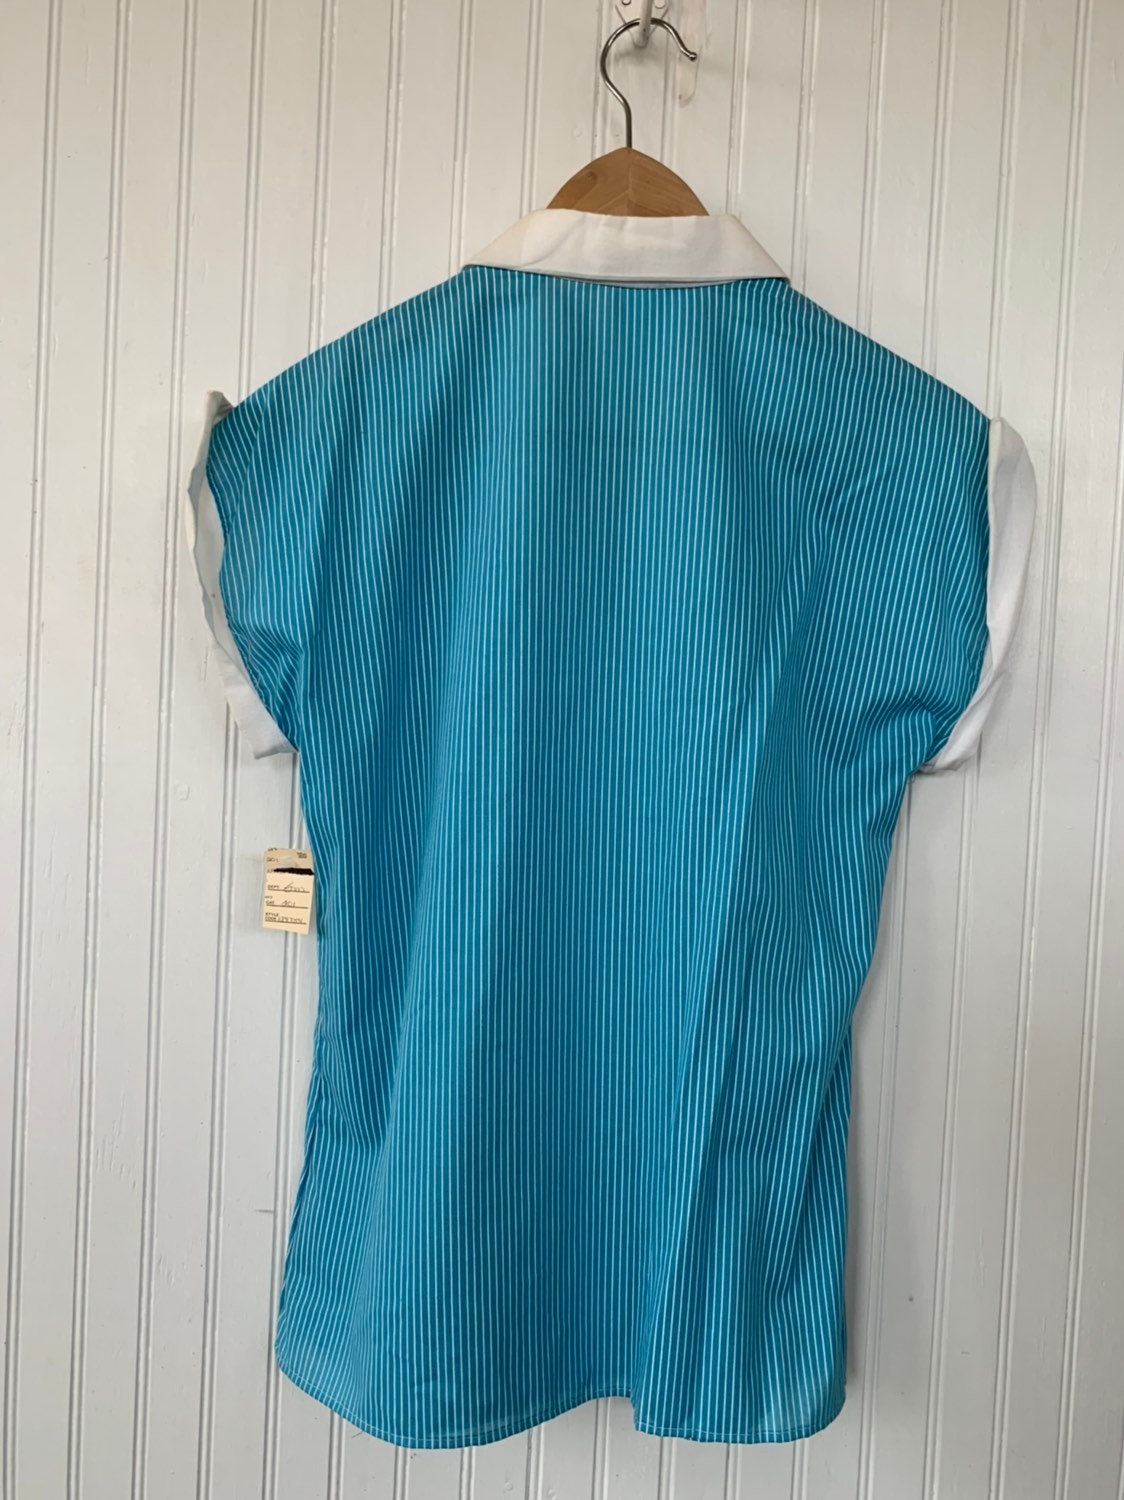 NWT 80s Vintage Turquoise Blue White Striped Sleeveless Top Size Small ...